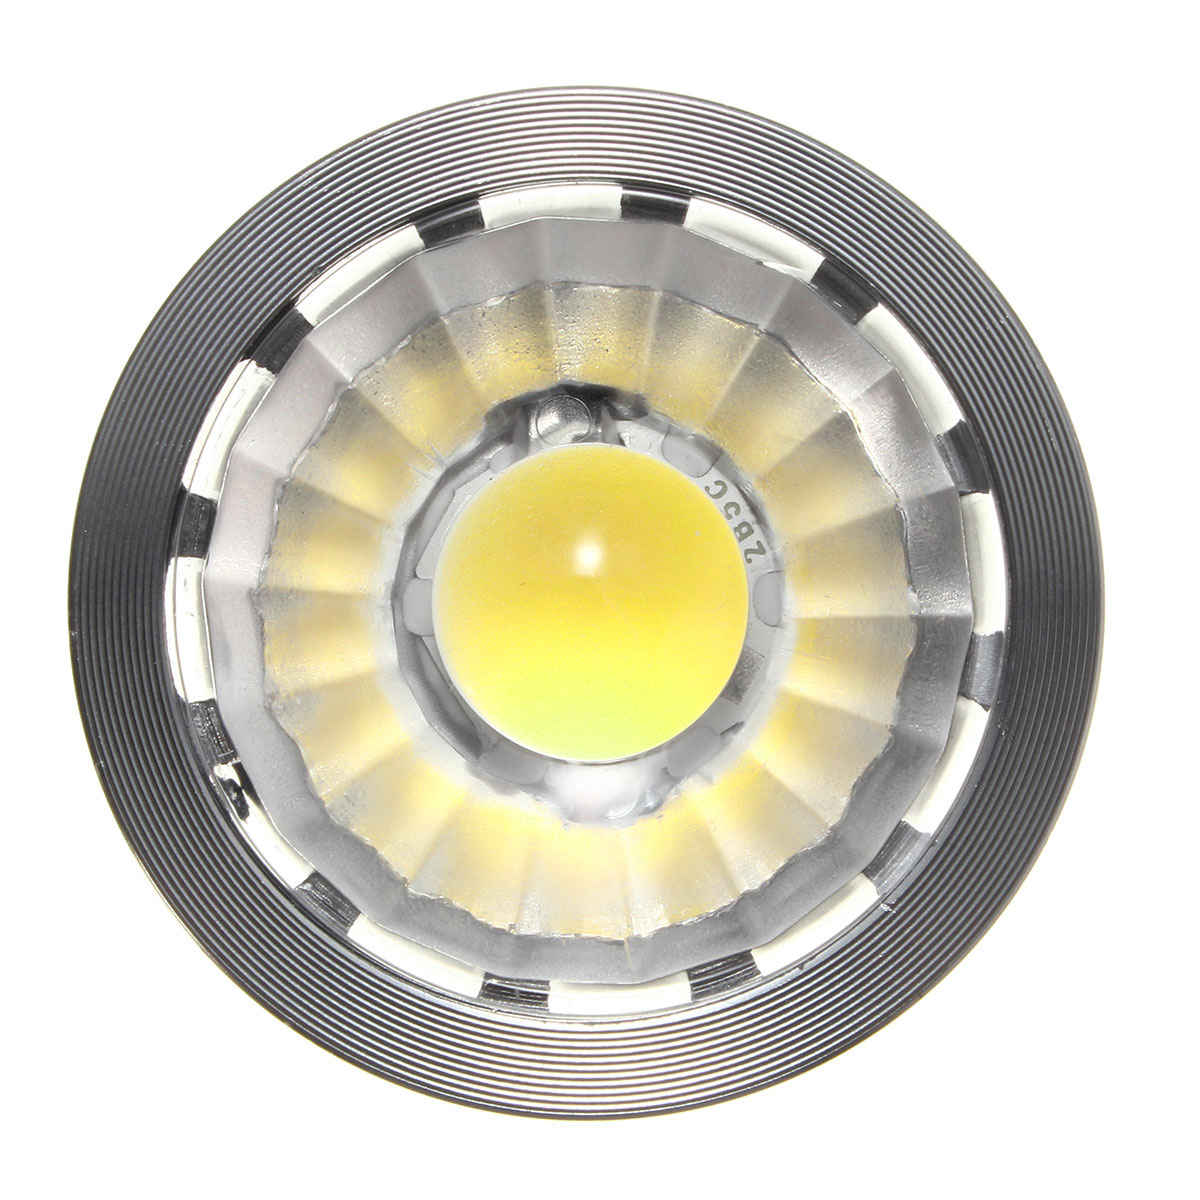 Dimmable-MR16-5W-LED-COB-Spotlight-Light-Bulb-for-Home-Office-Kitchen-DC12V-1424983-6